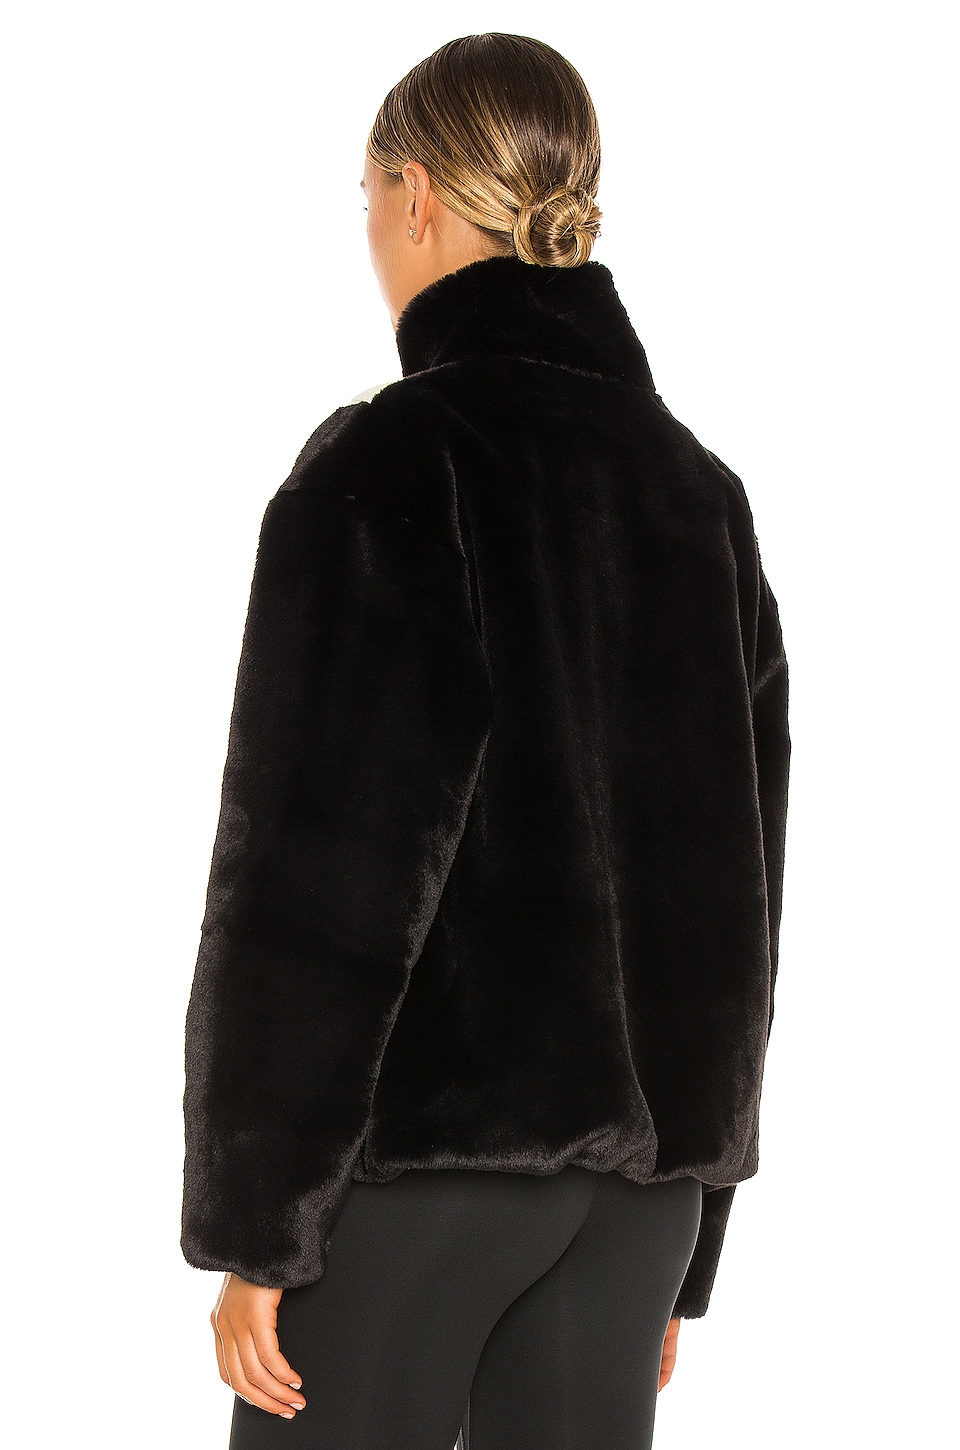 Nike NSW Plush Faux Fur Jacket in Black & Fossil | REVOLVE